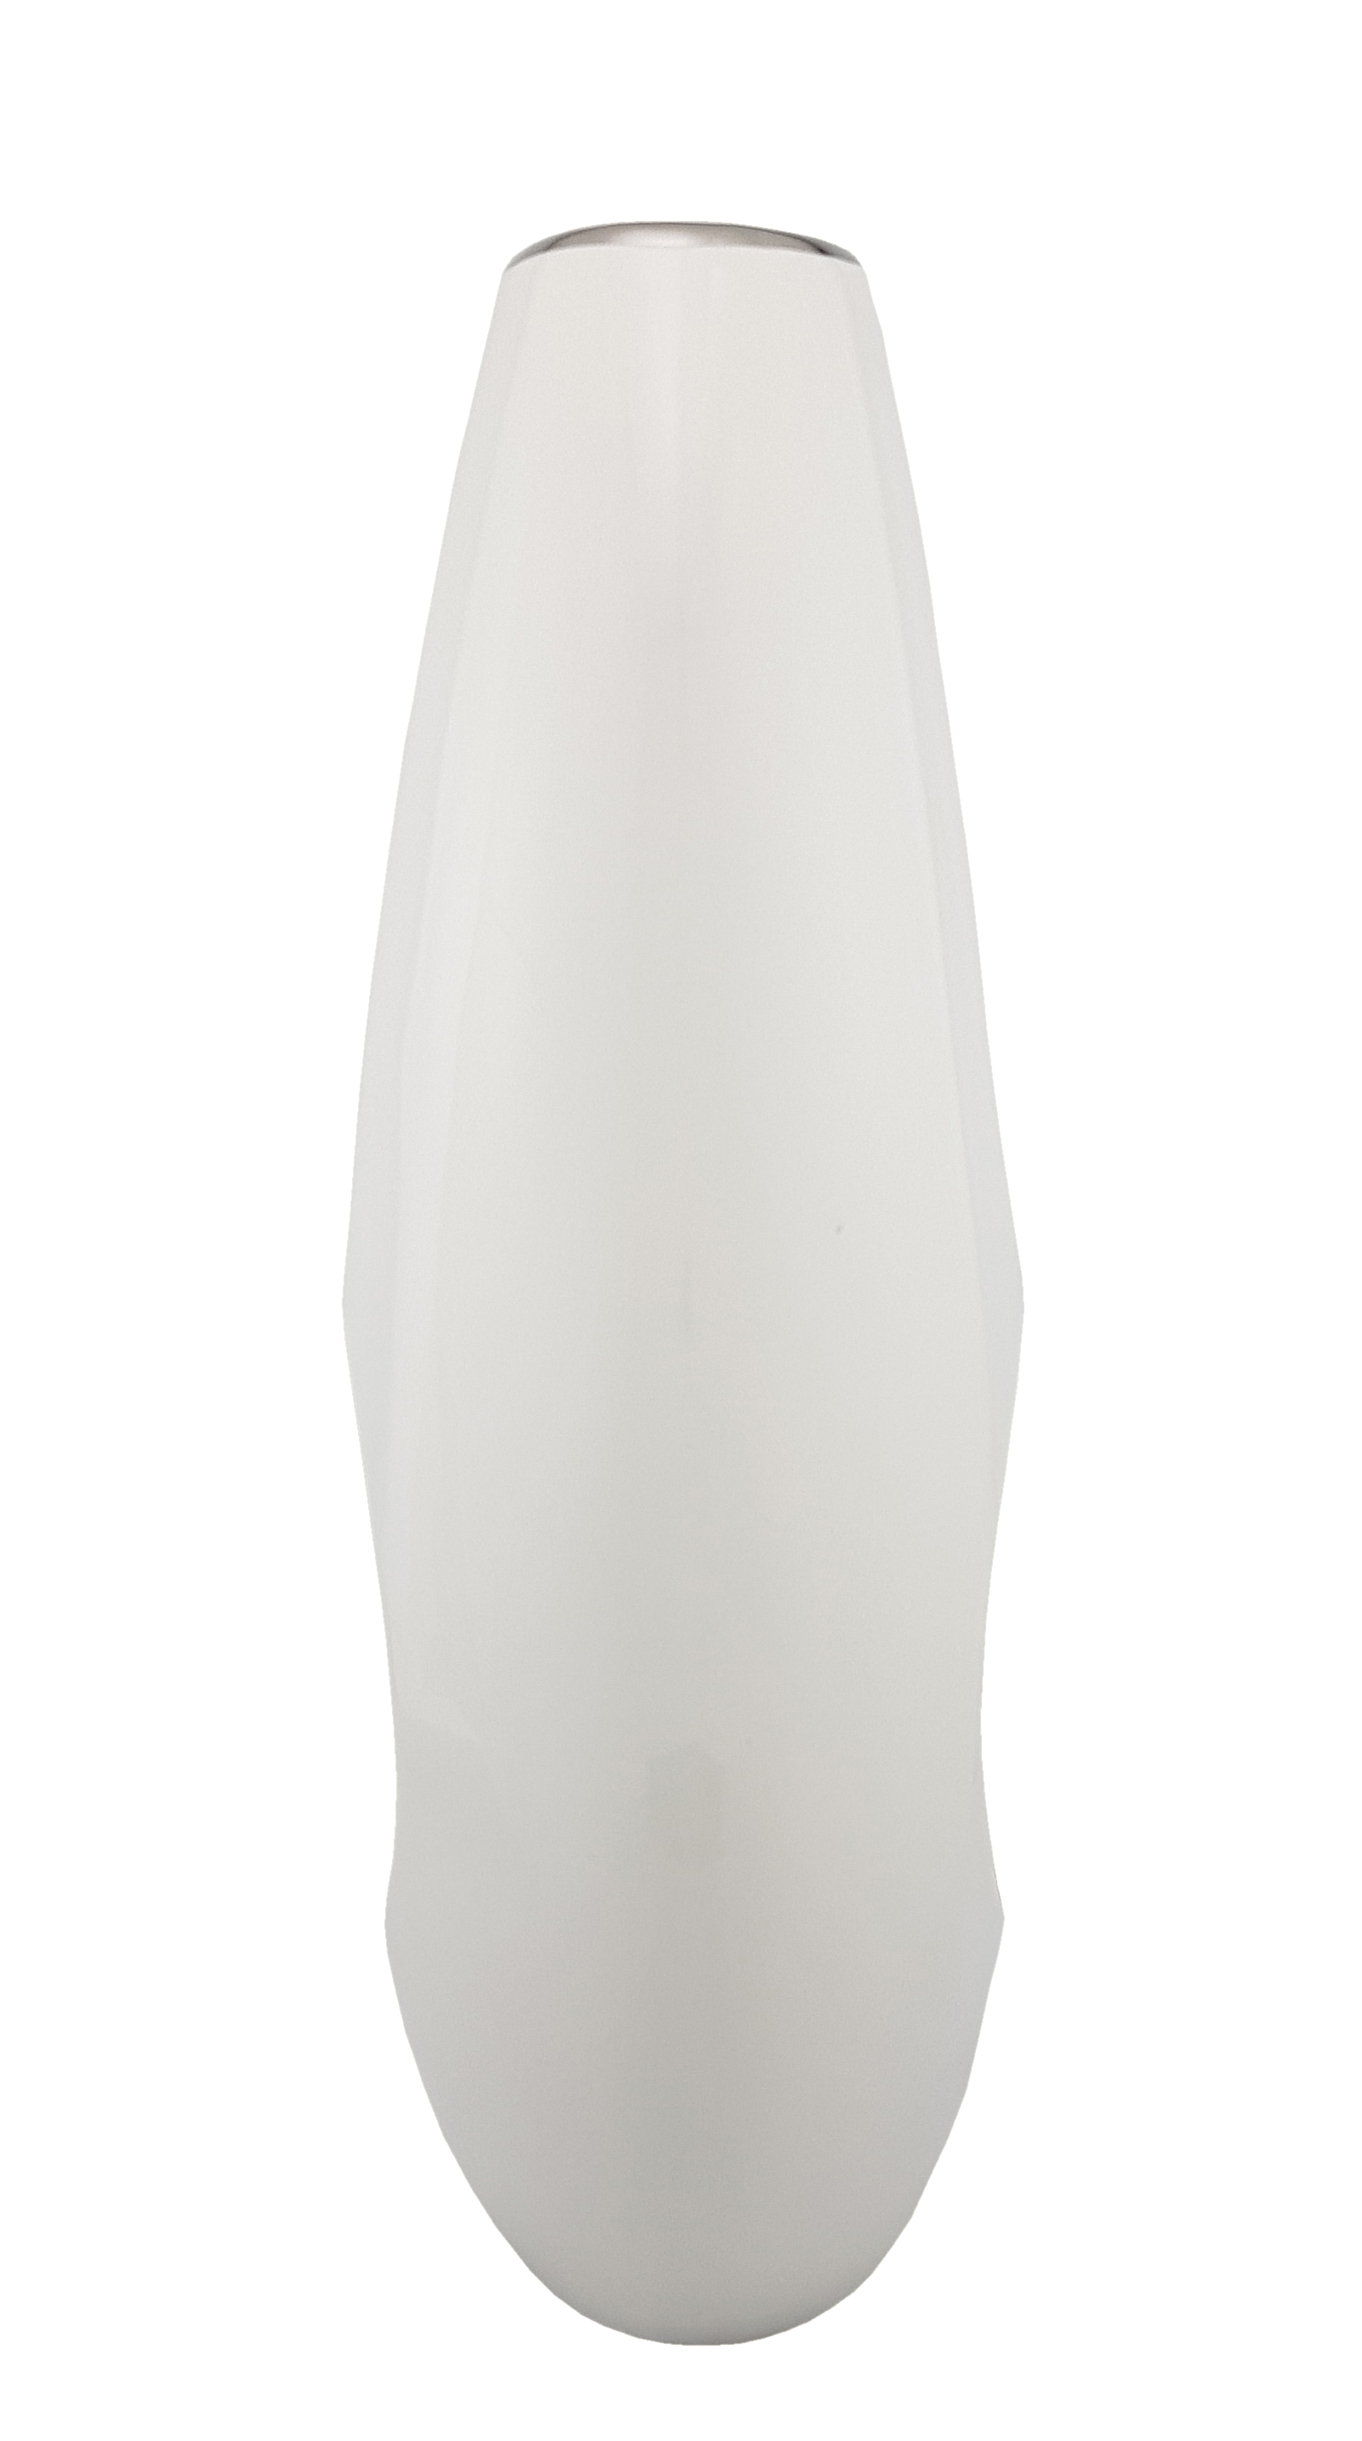 Vase profil 240623 VF